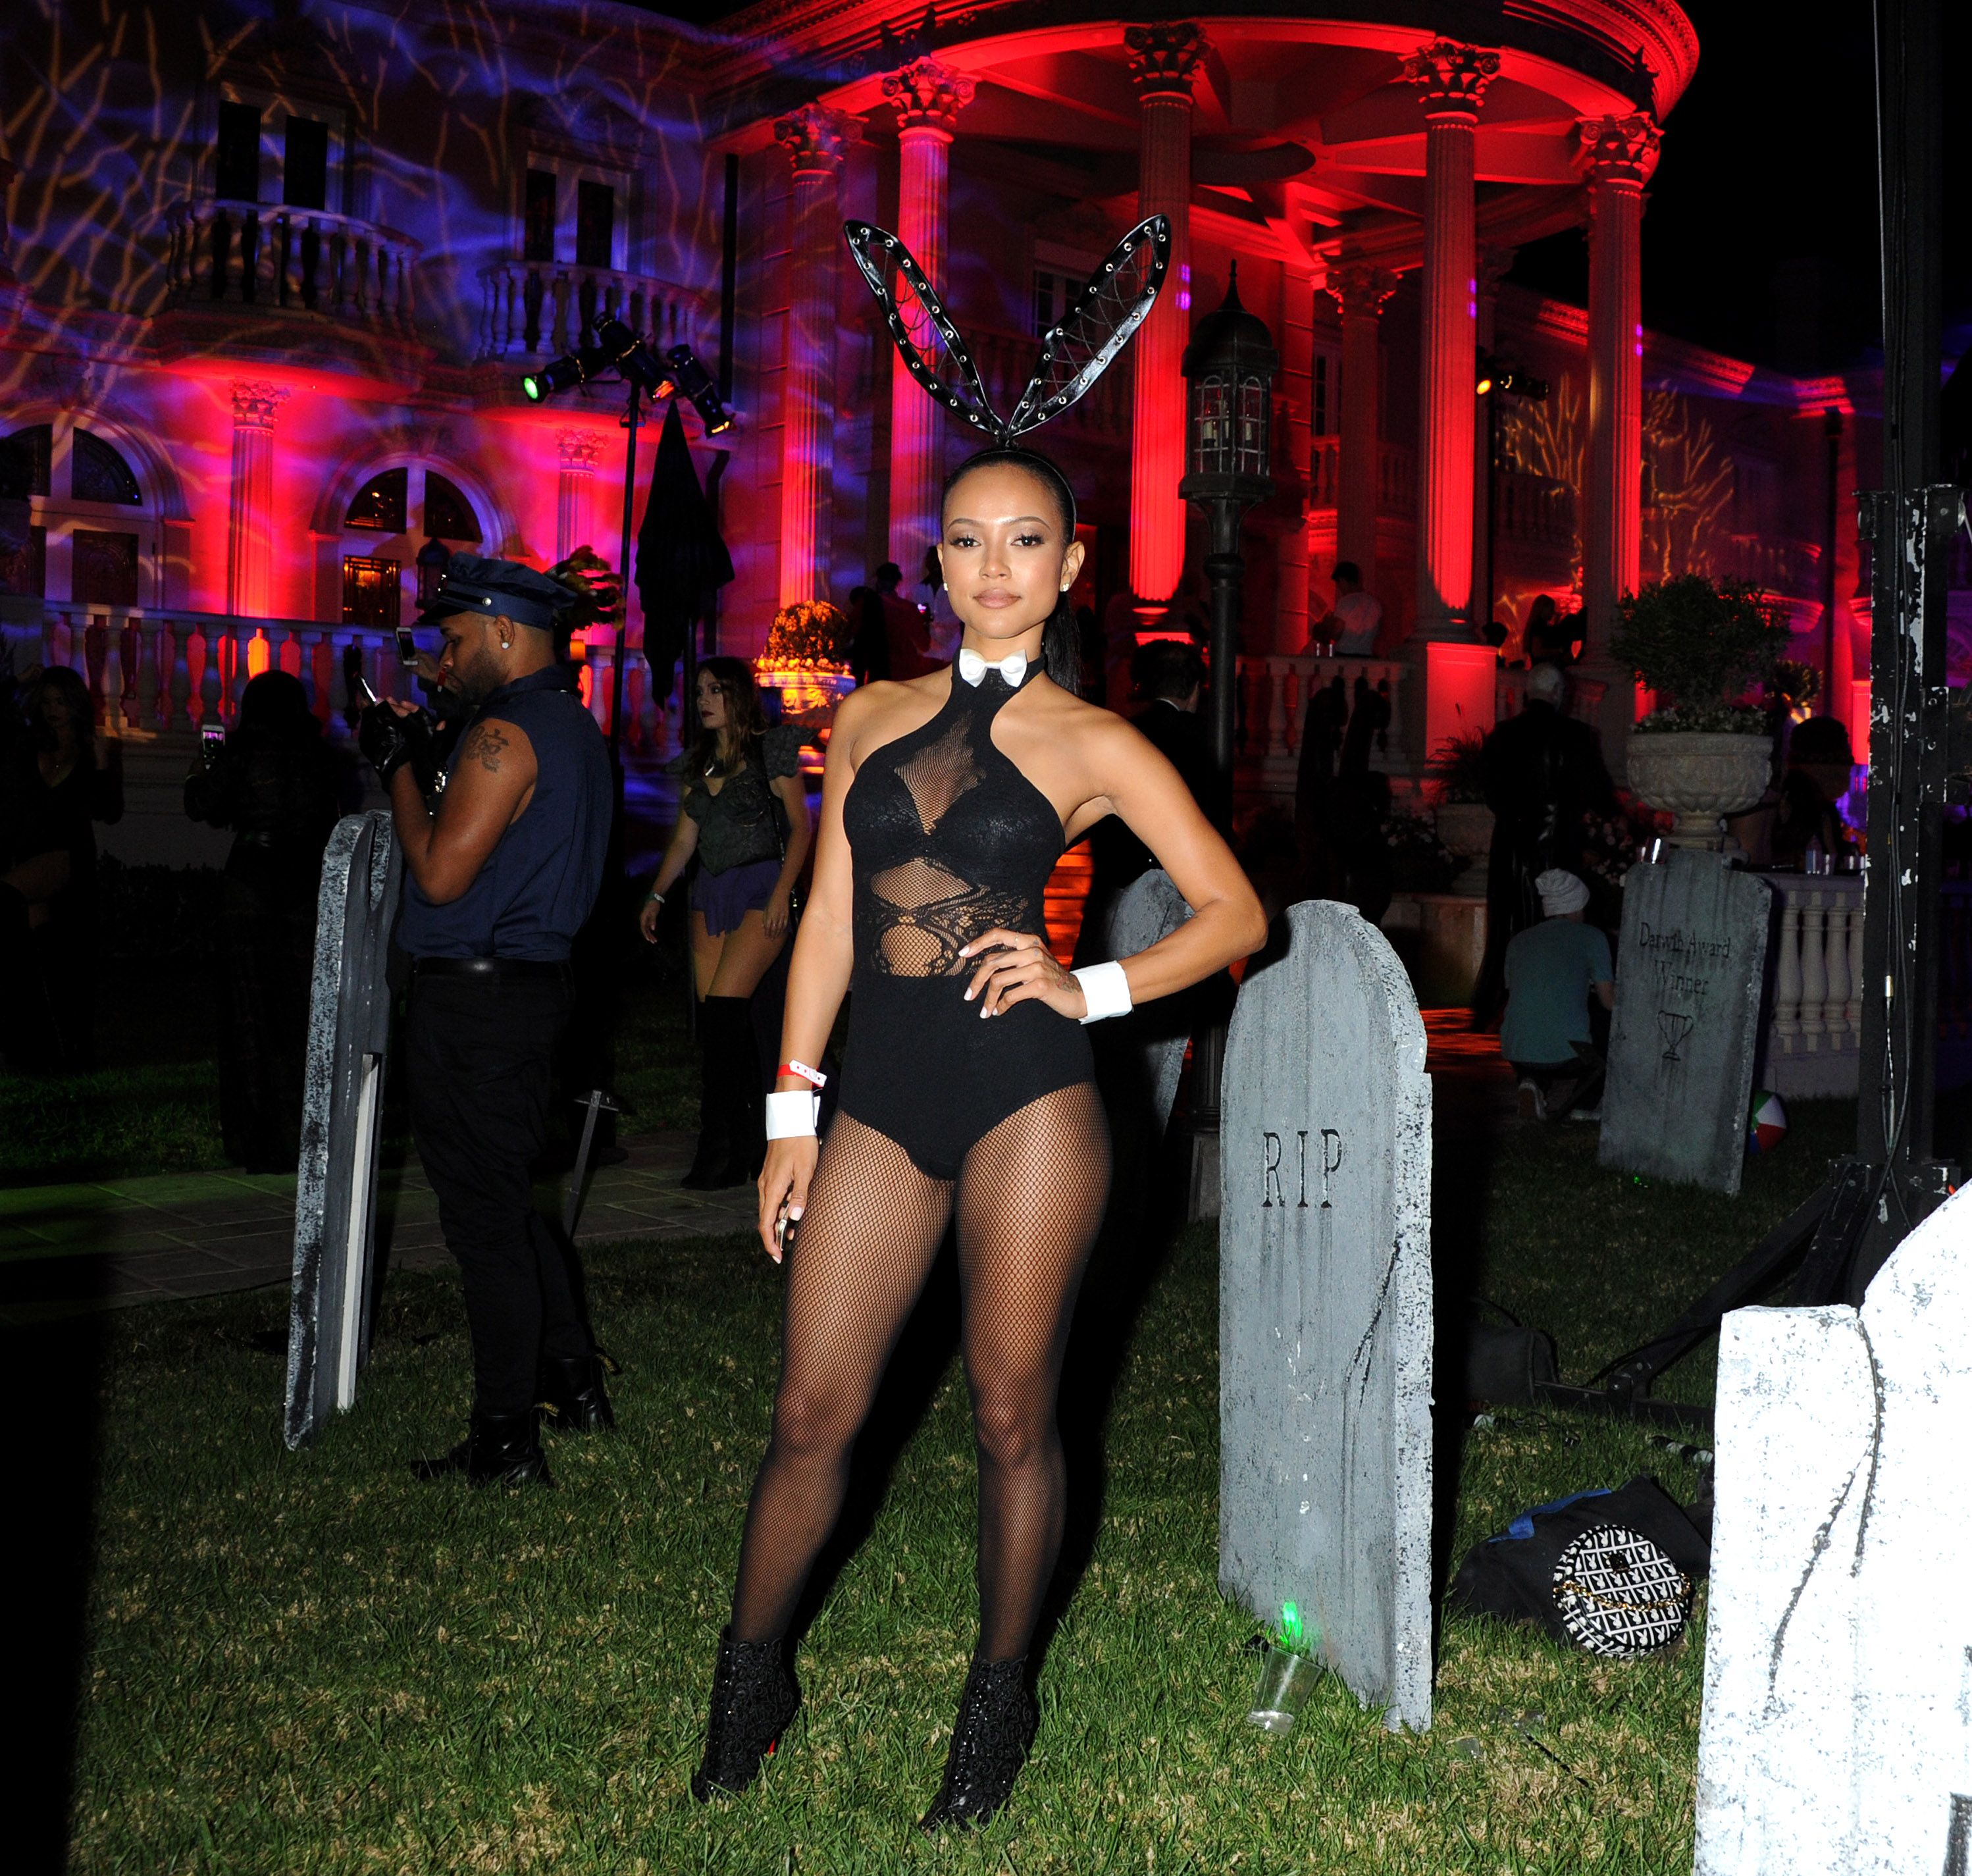 Rihanna Braless: Photos of the Singer Not Wearing a Bra